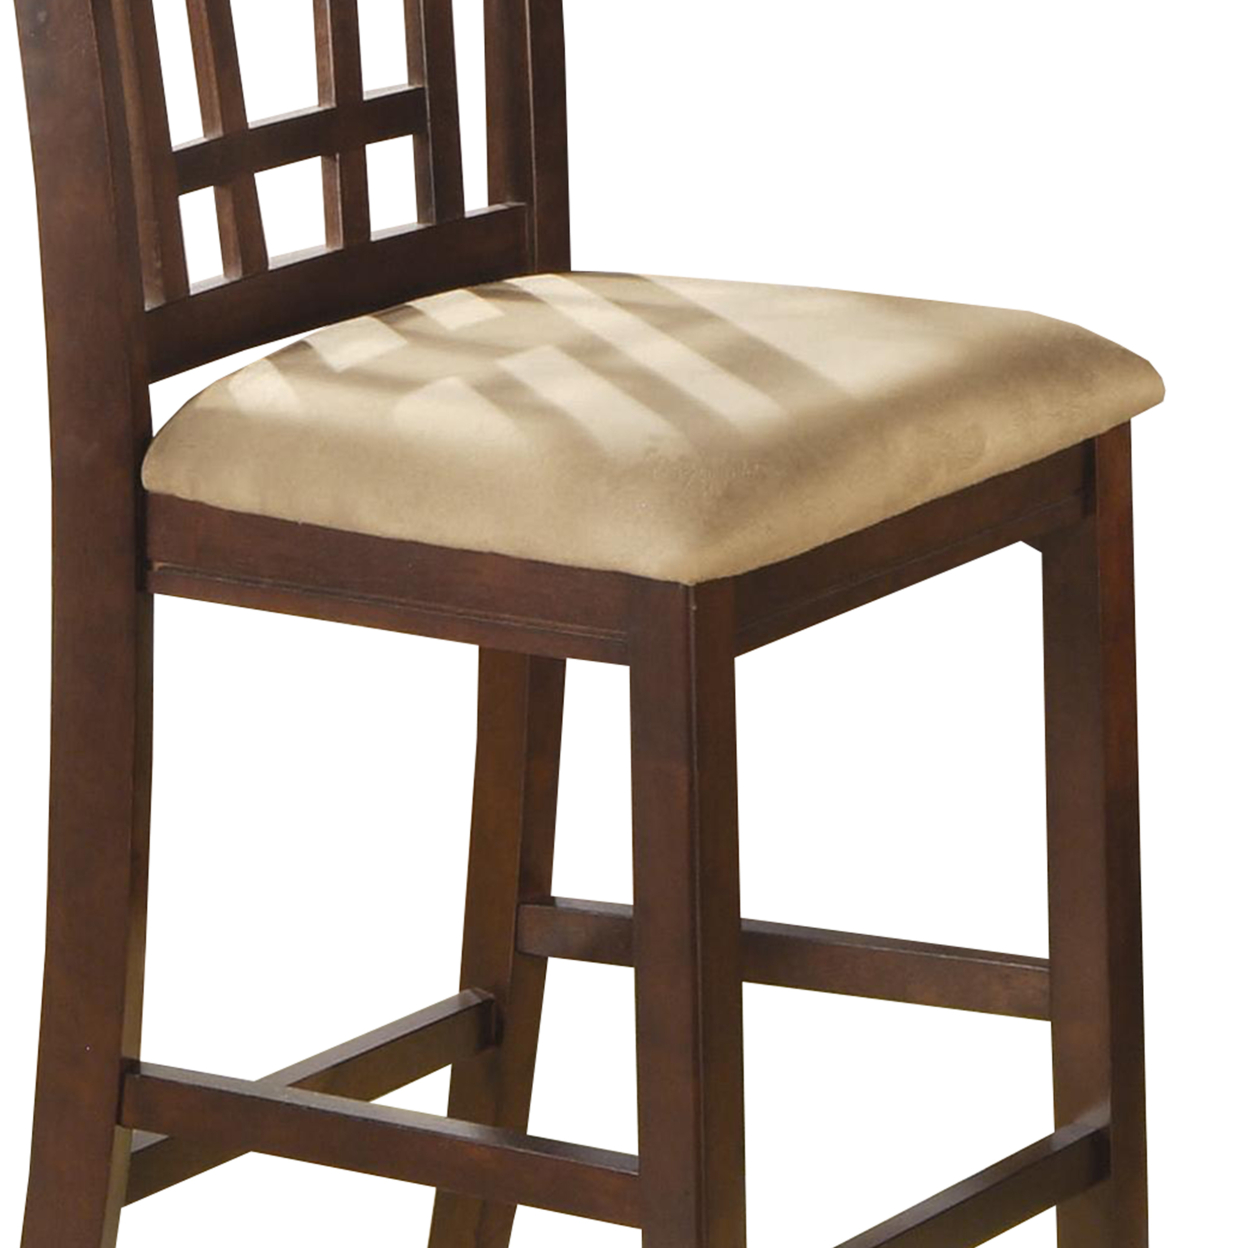 Wooden Contemporary Armless Counter Height Chair, Tan & Warm Brown., Set Of 2- Saltoro Sherpi